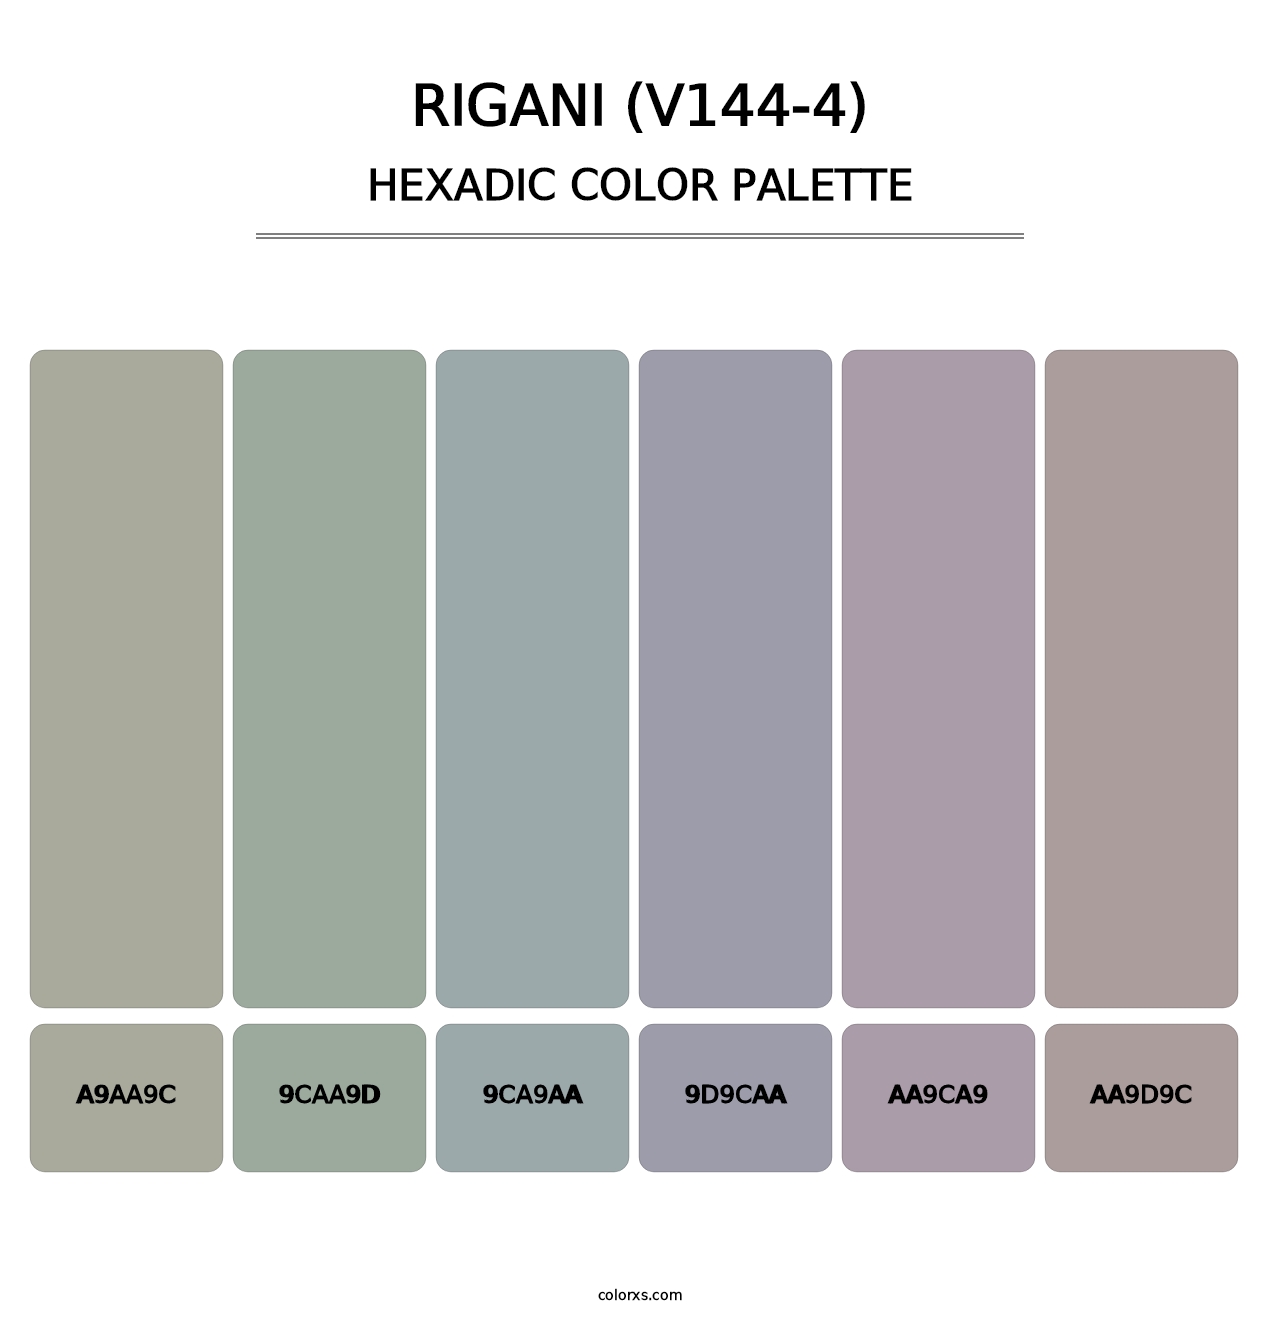 Rigani (V144-4) - Hexadic Color Palette